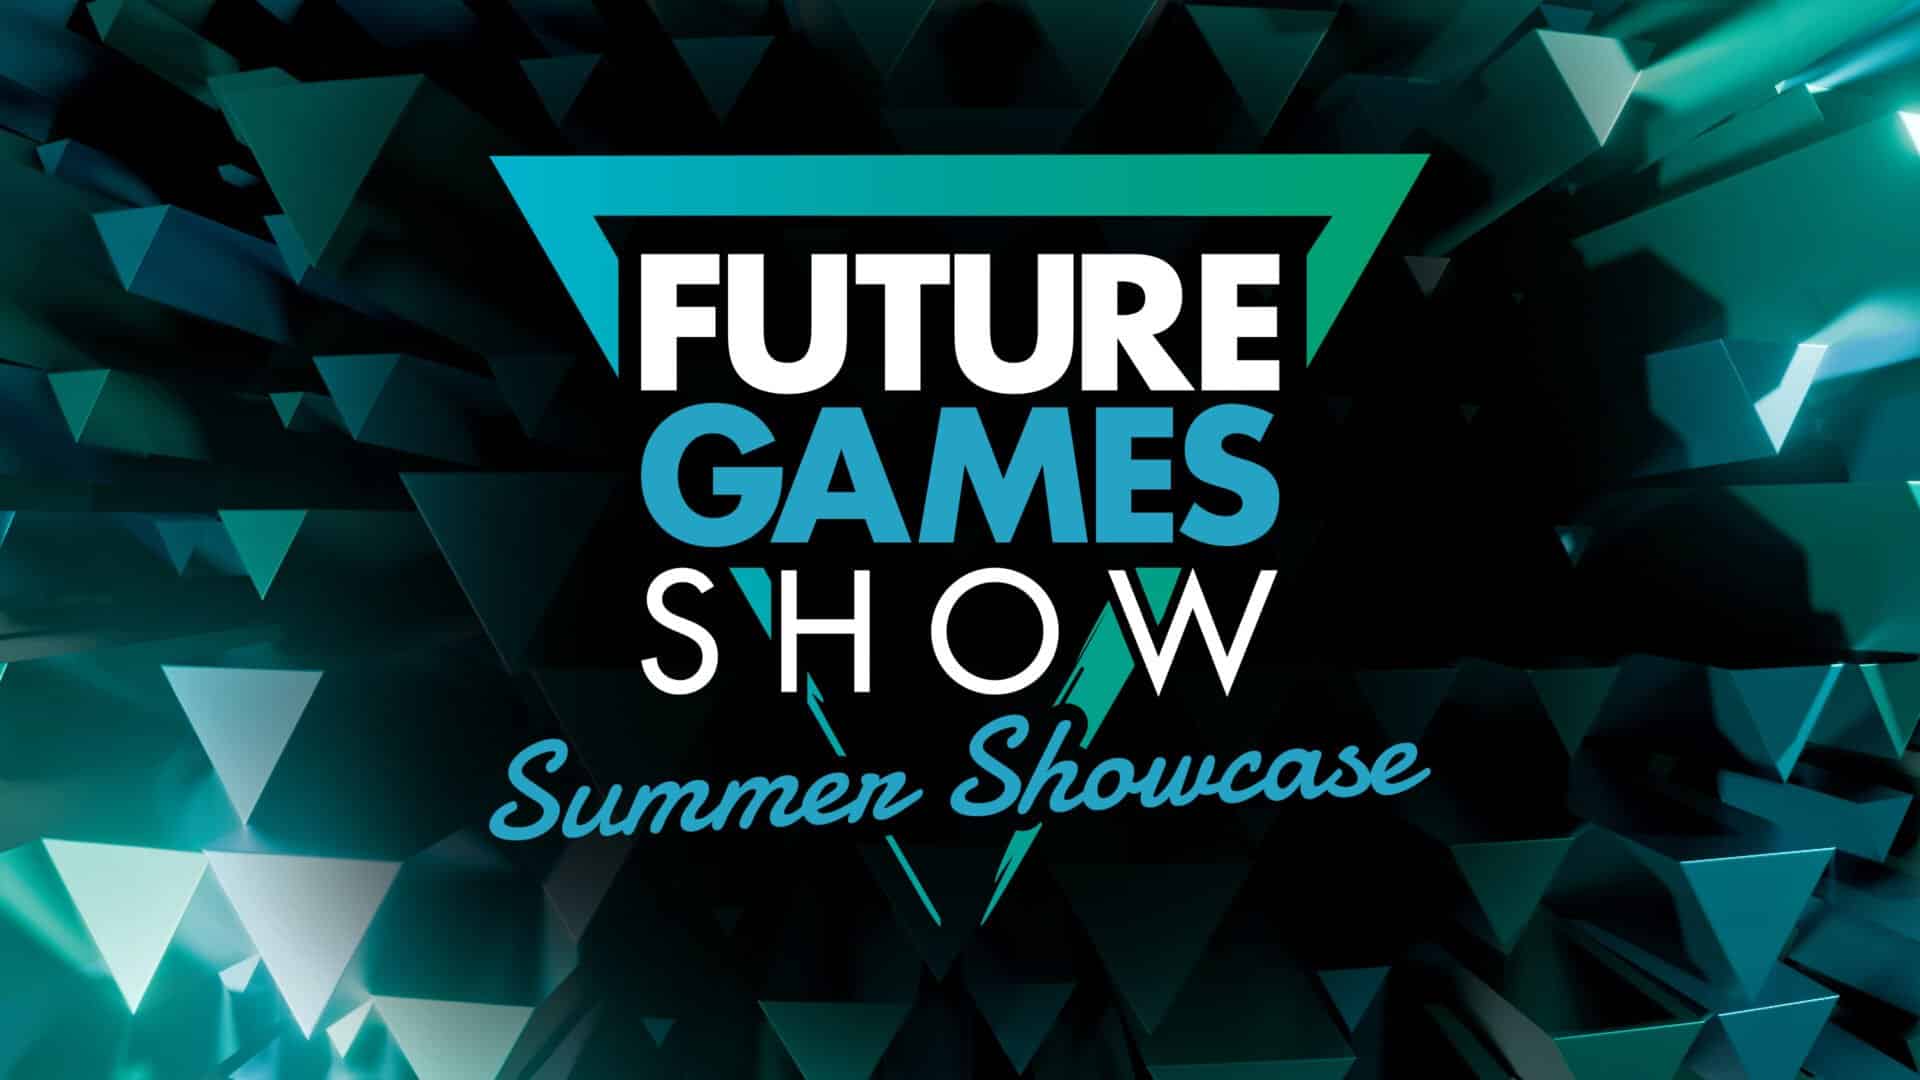 Future games show 7